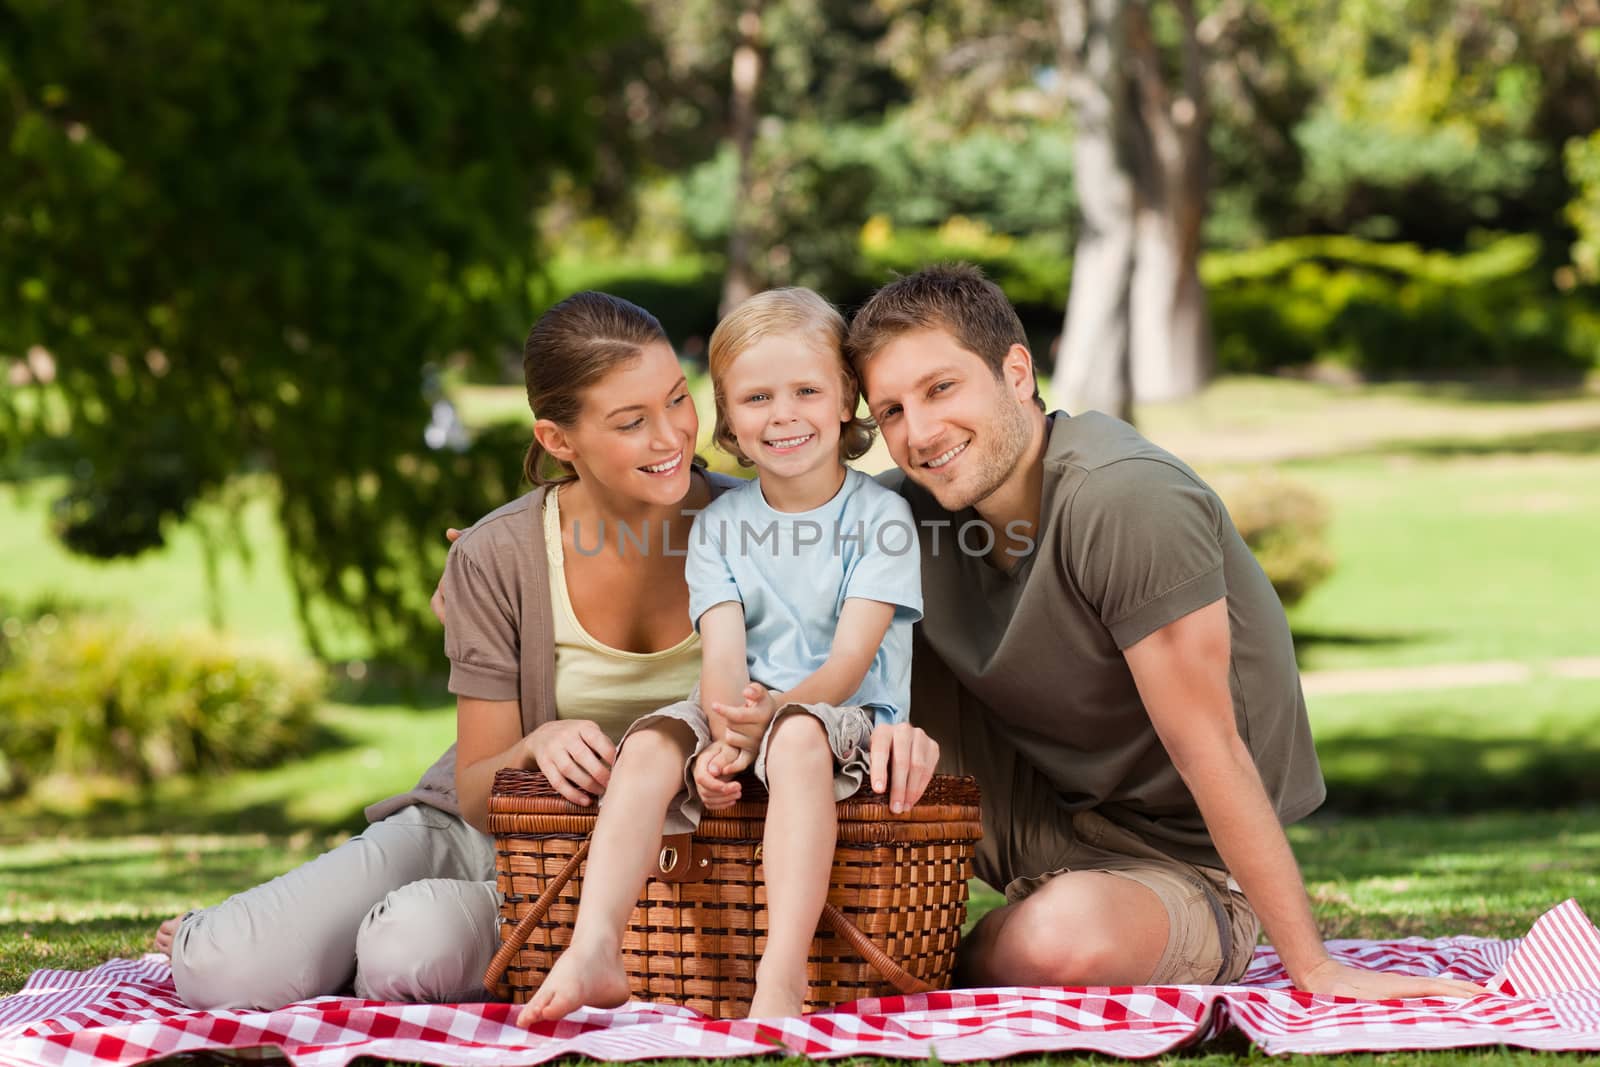 Joyful family picnicking in the park by Wavebreakmedia